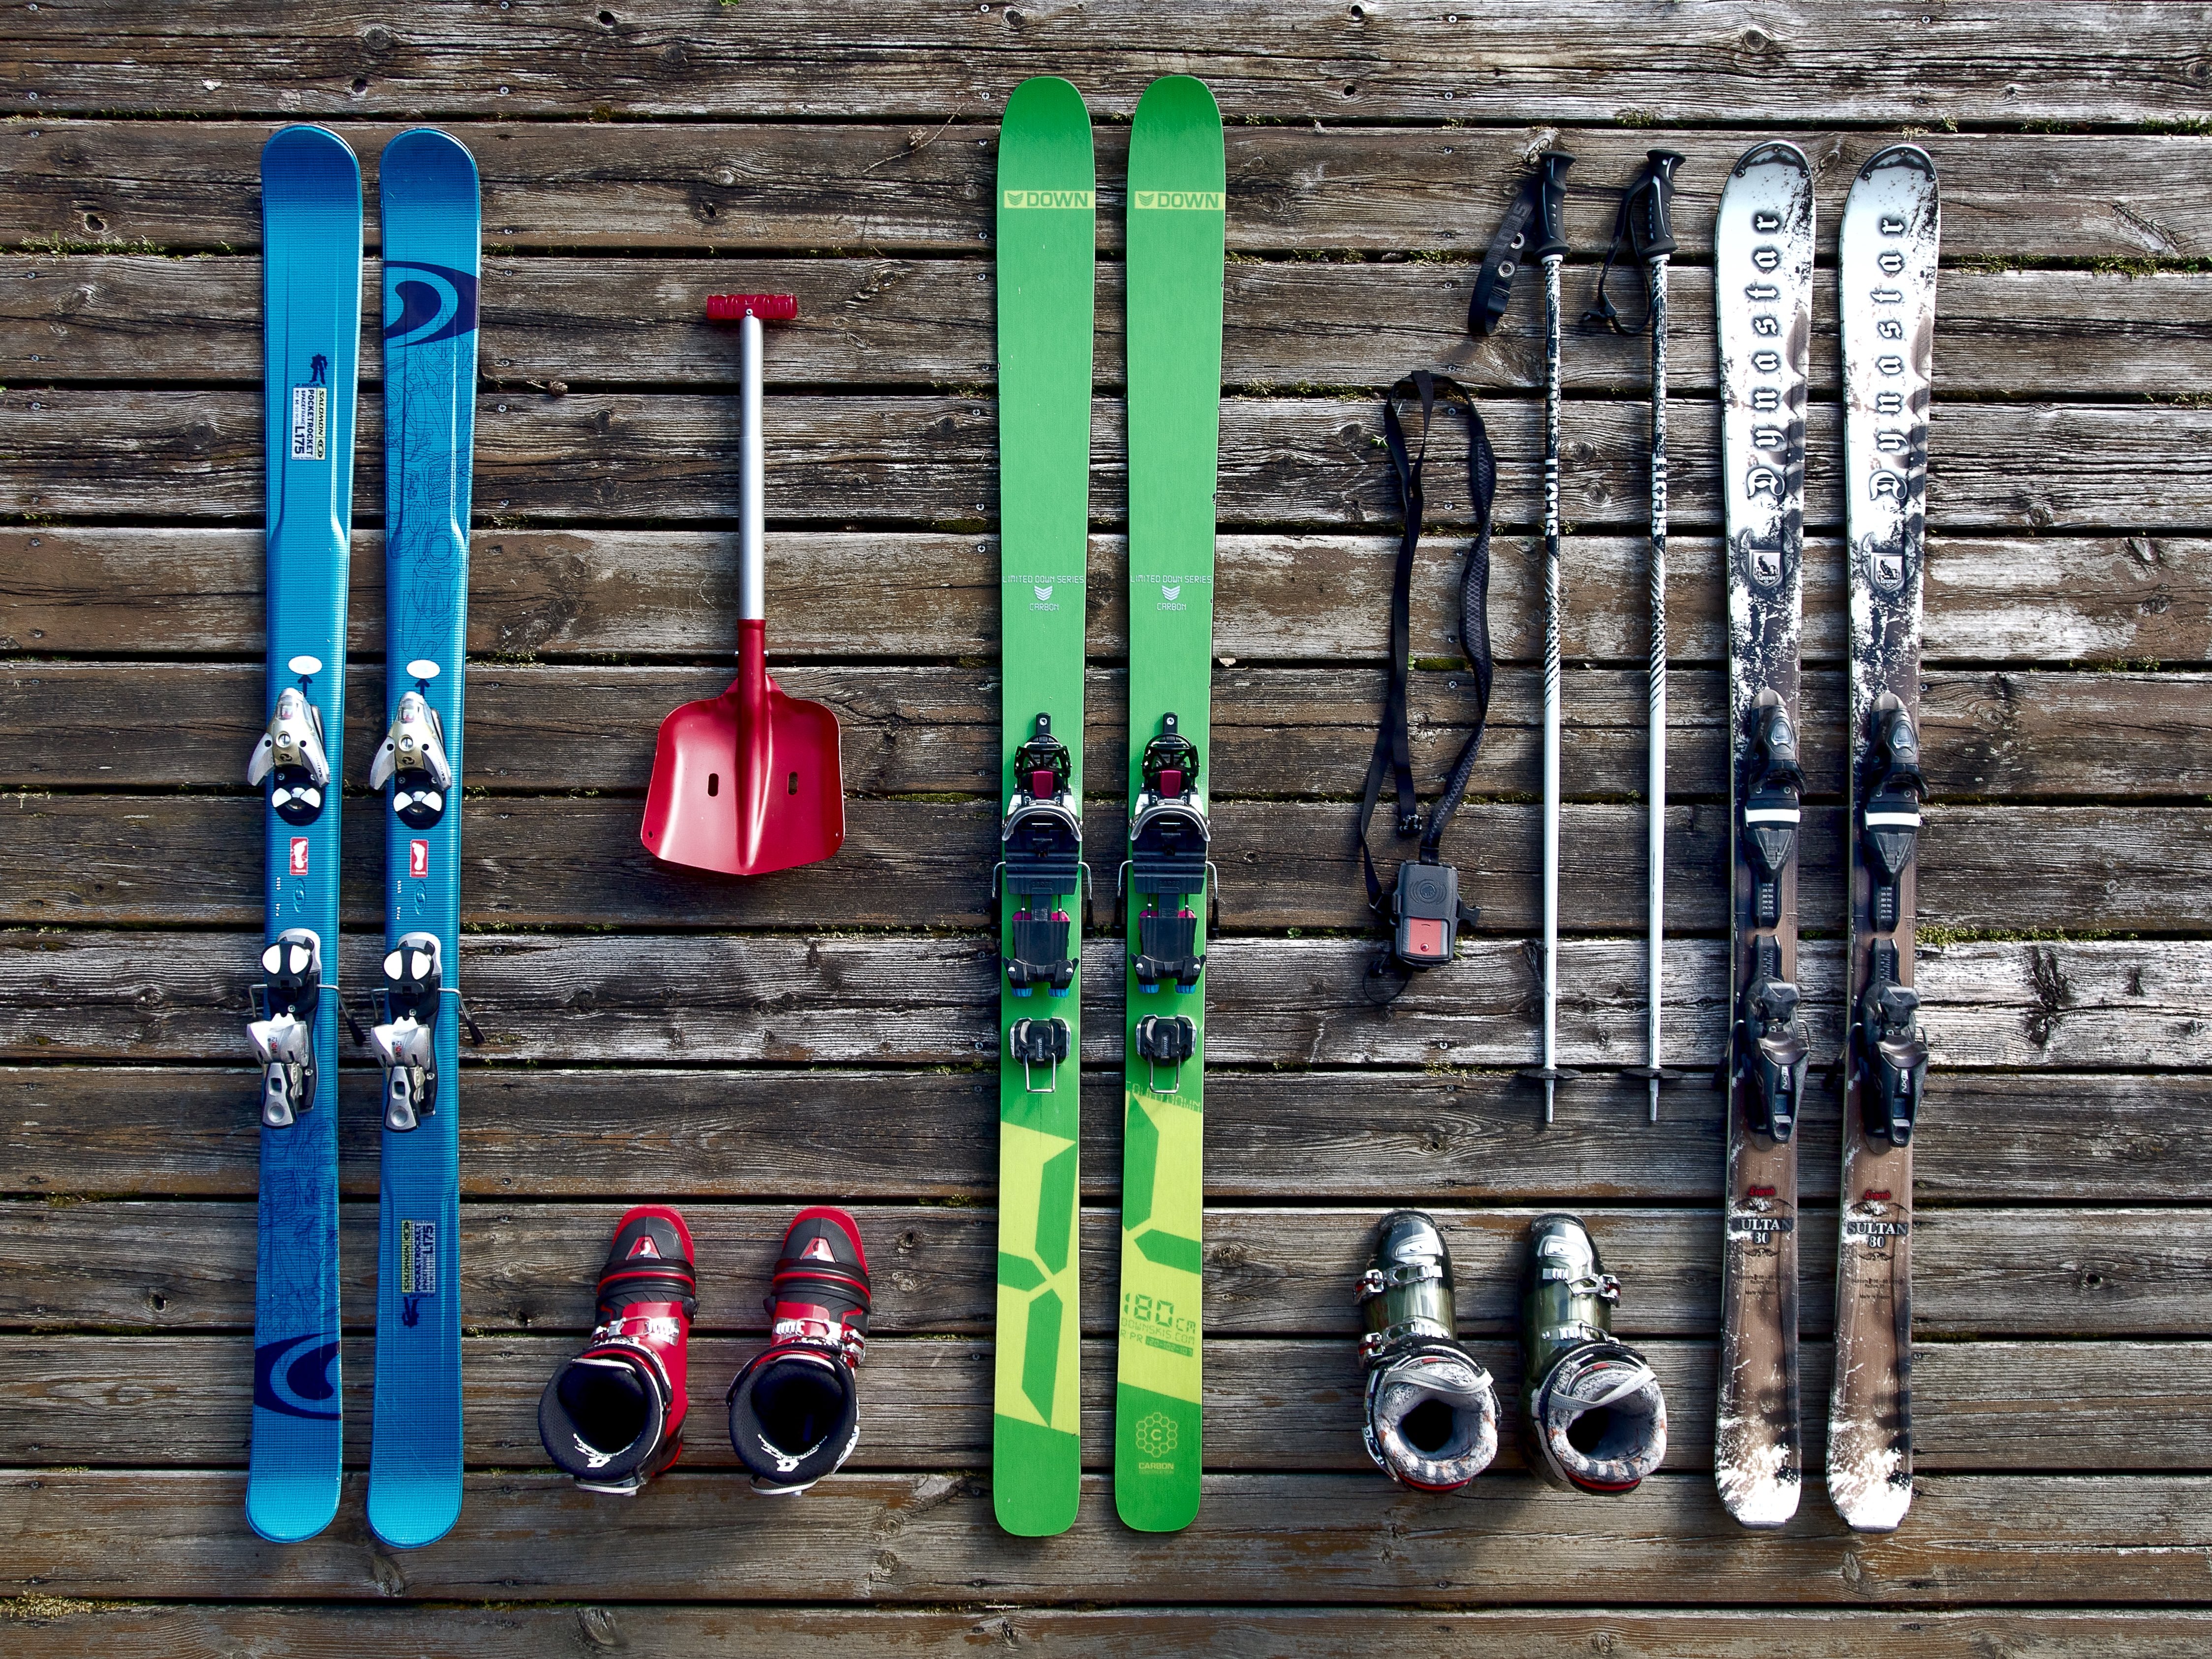 Skiing equipment - ski boots, skis and ski poles by tookapic